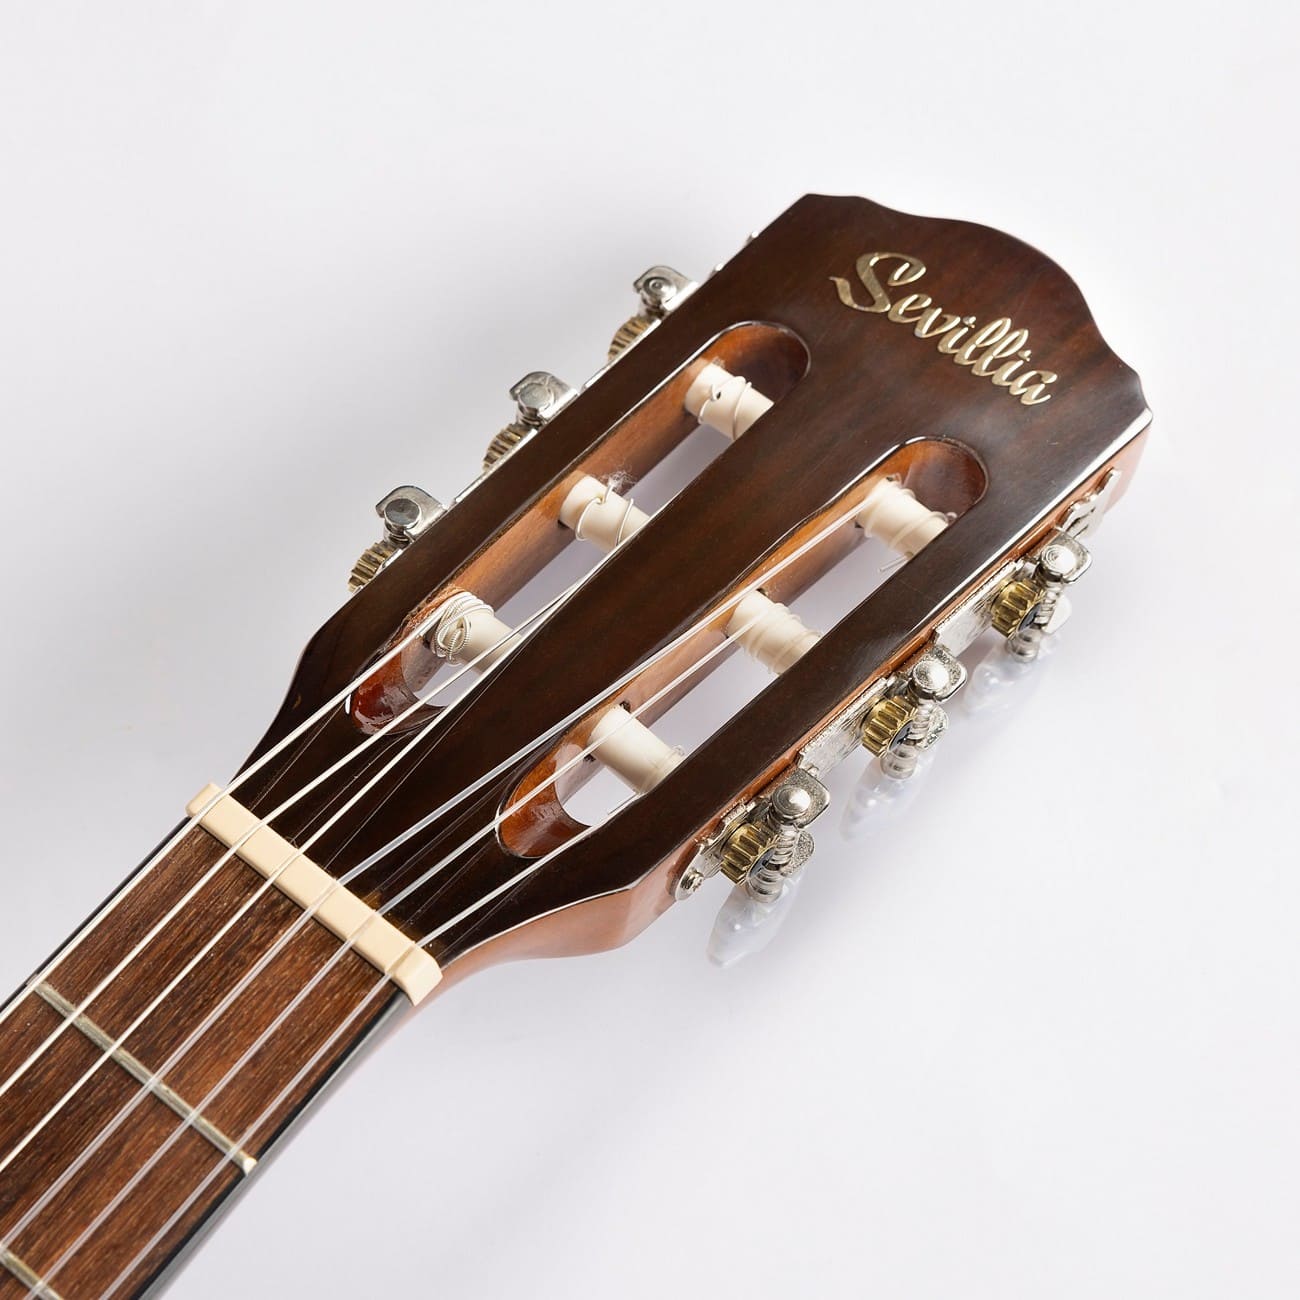 Детская гитара Sevillia DS-100 3/4 NT